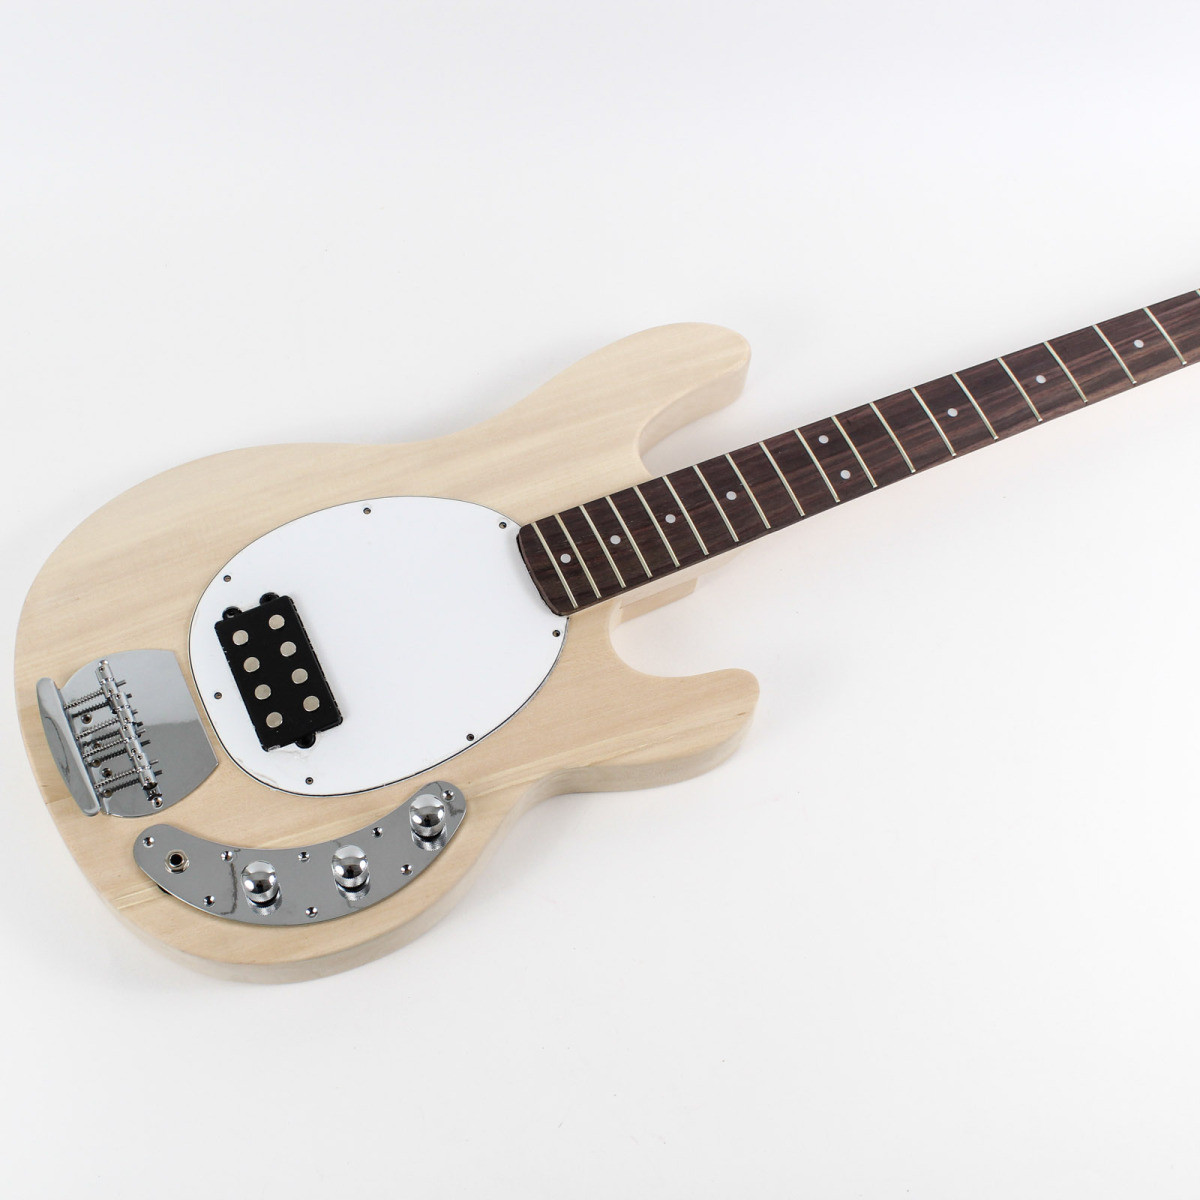 Best ideas about DIY Bass Kits
. Save or Pin Music Man StingRay Bass Guitar Kit DIY Guitars Now.